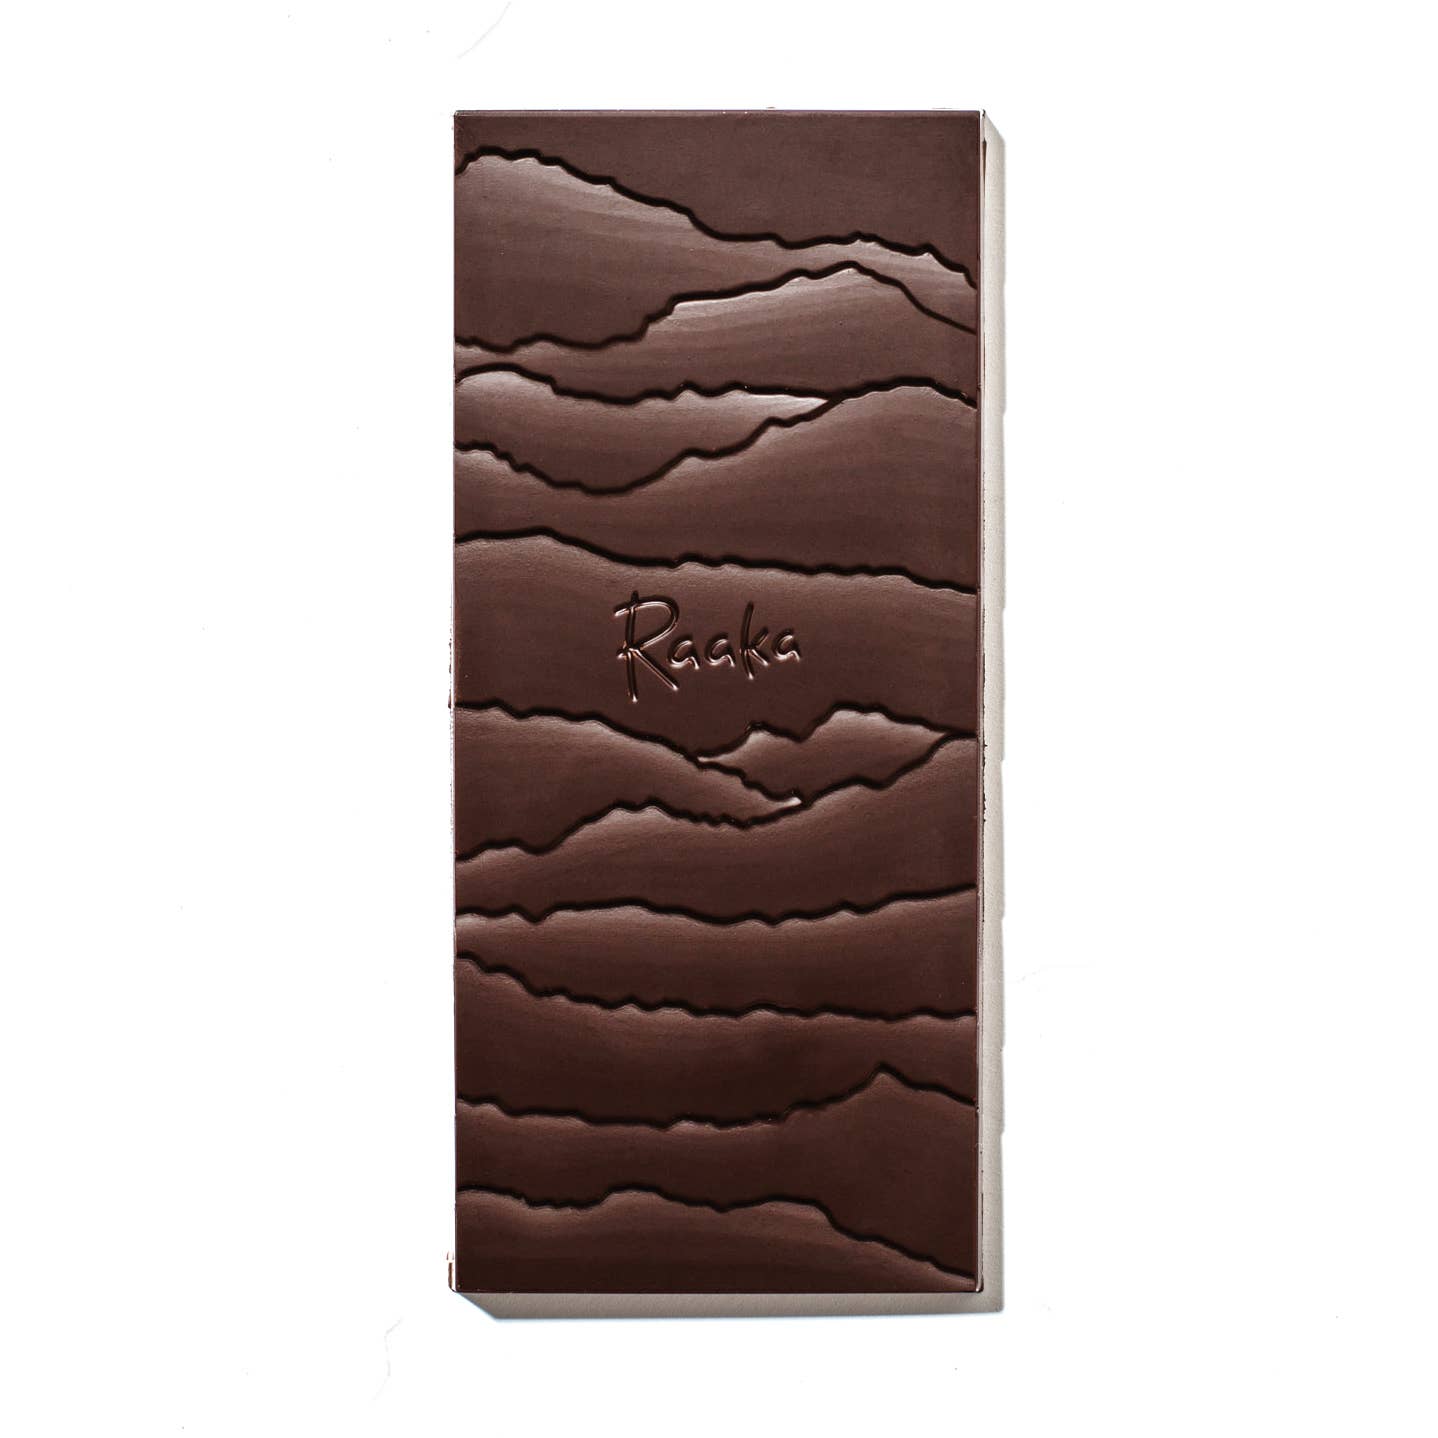 Raaka Chocolate - 82% Bourbon Cask Aged Chocolate Bar  Raaka Chocolate   